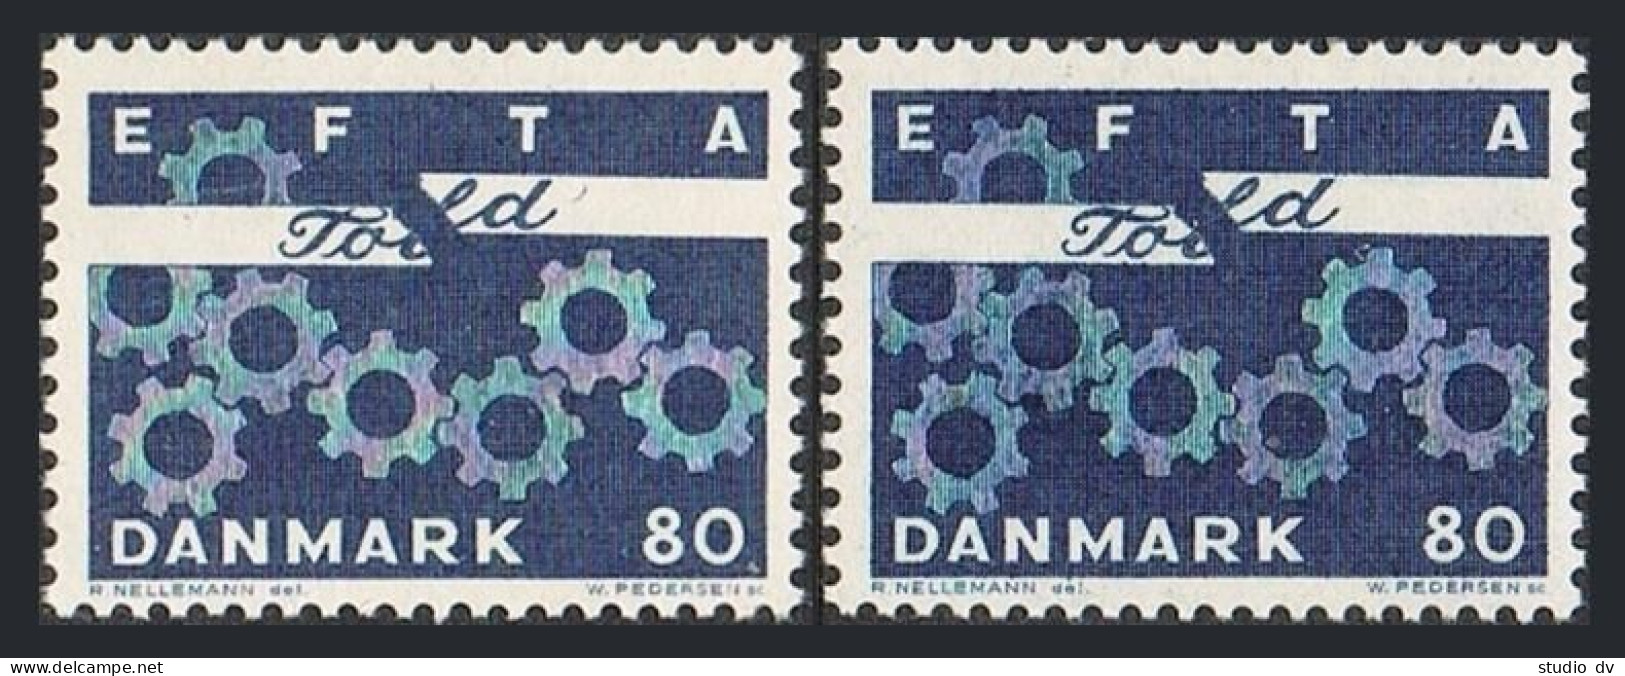 Denmark 431 Two Var, MNH. Michel 450x-450y. EFTA, 1967. Cogwheels. - Nuovi